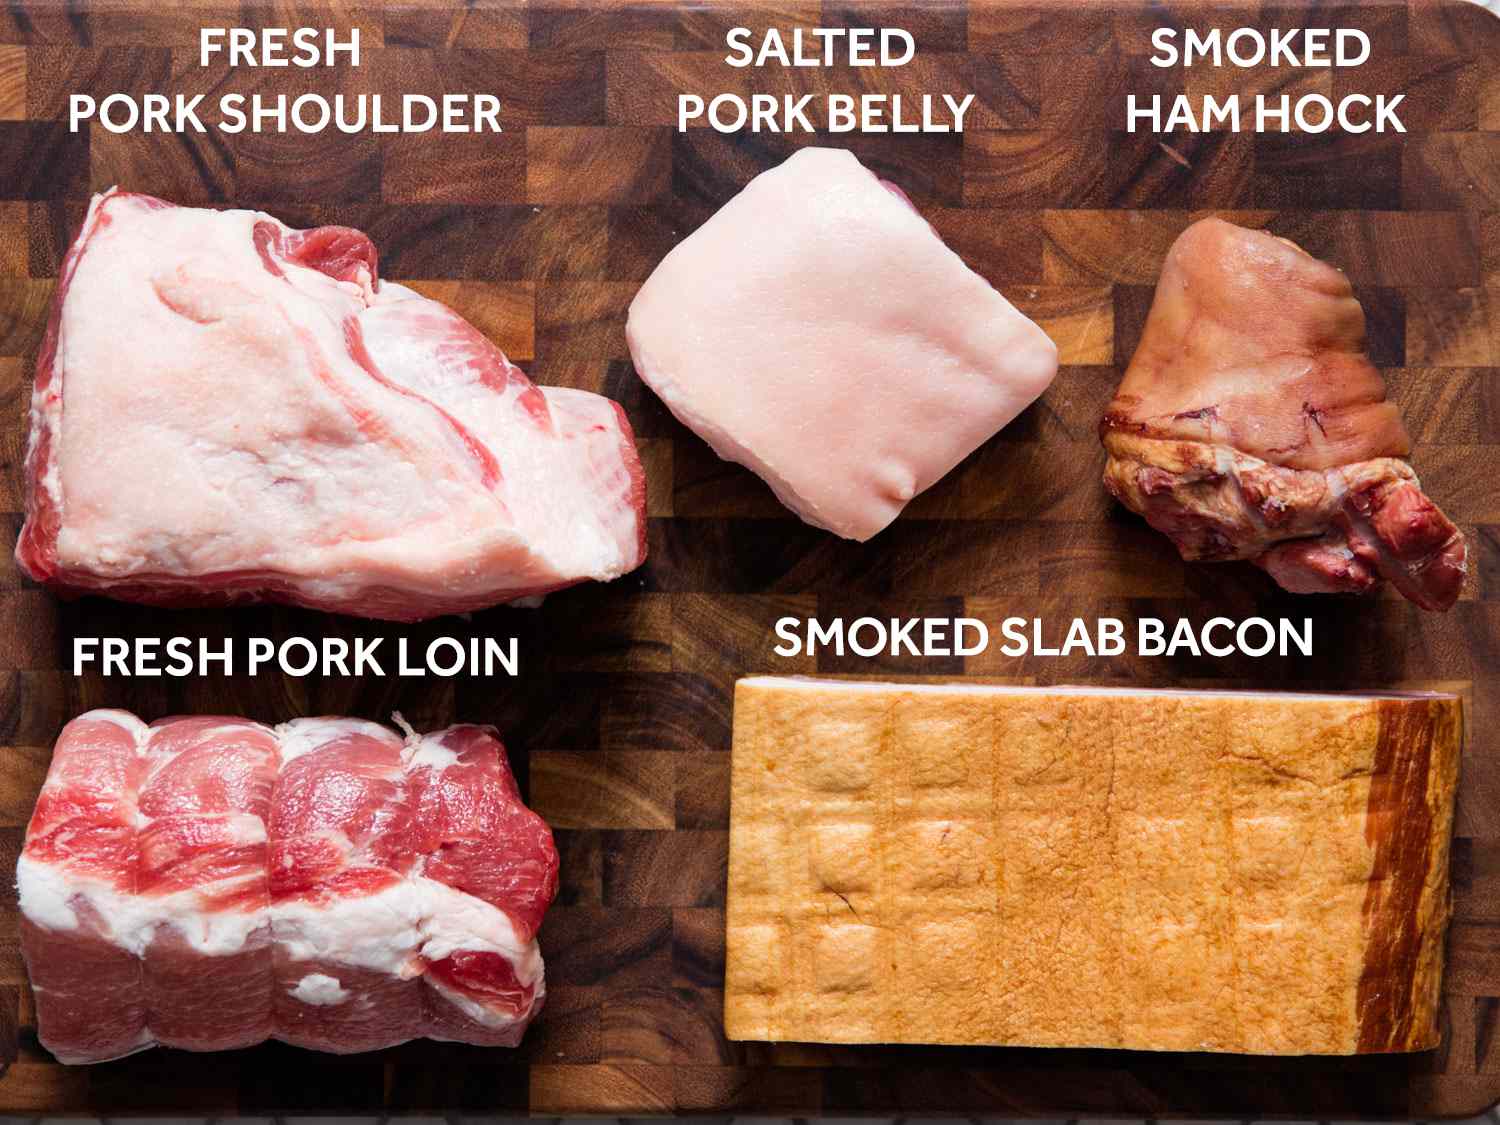 choucroute garnie所需的所有肉类(除了香肠)都被放在砧板上，并贴上标签:新鲜猪肩肉、咸肉五花肉、烟熏火腿节、新鲜猪里脊肉、烟熏大块培根。gydF4y2Ba